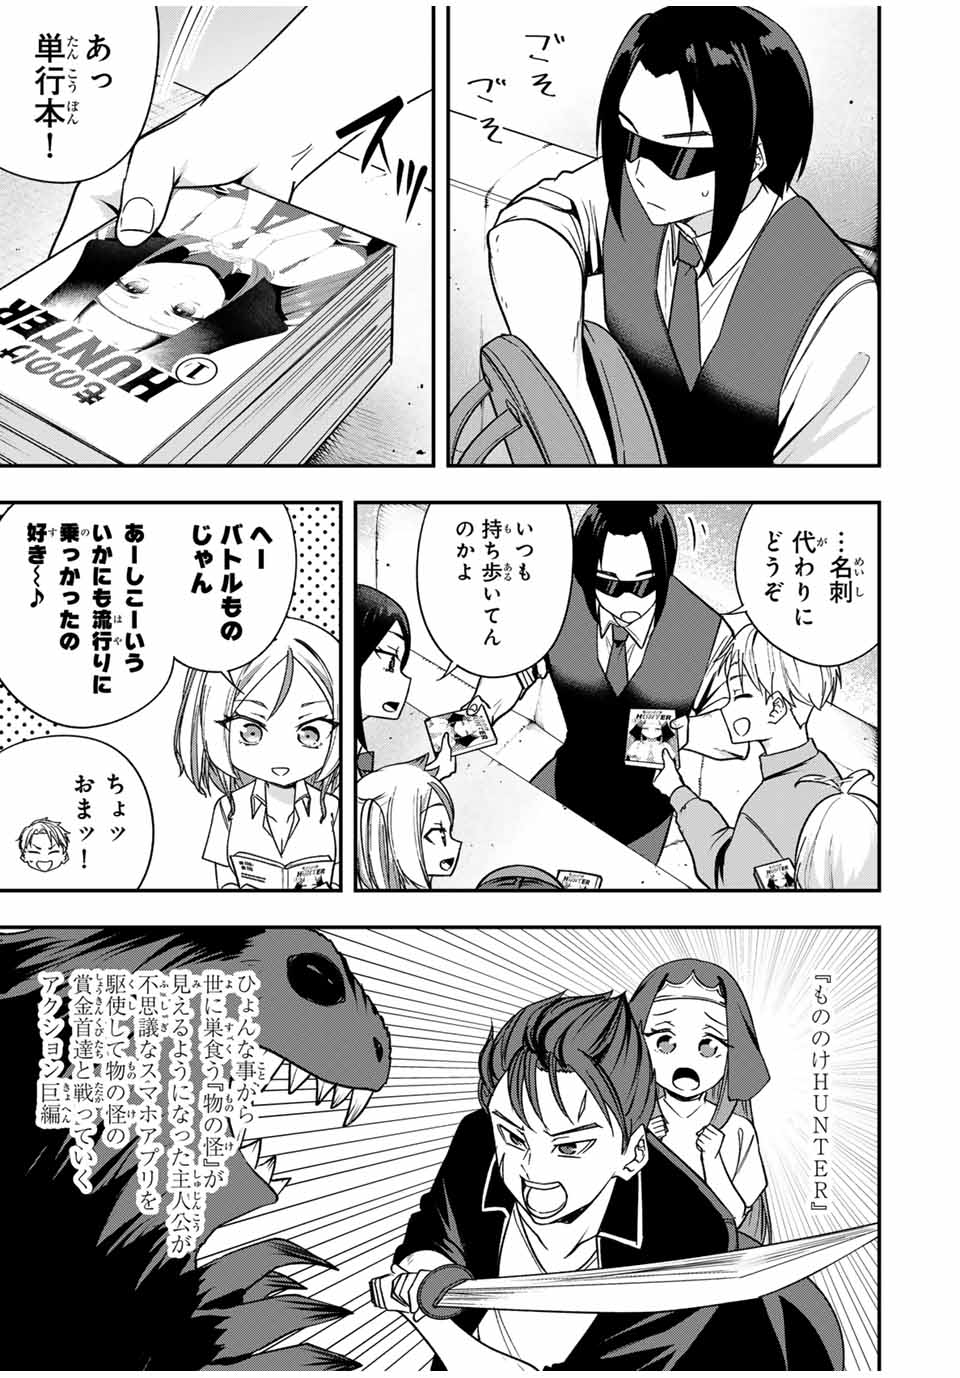 Heroine wa xx Okasegitai - Chapter 12 - Page 9